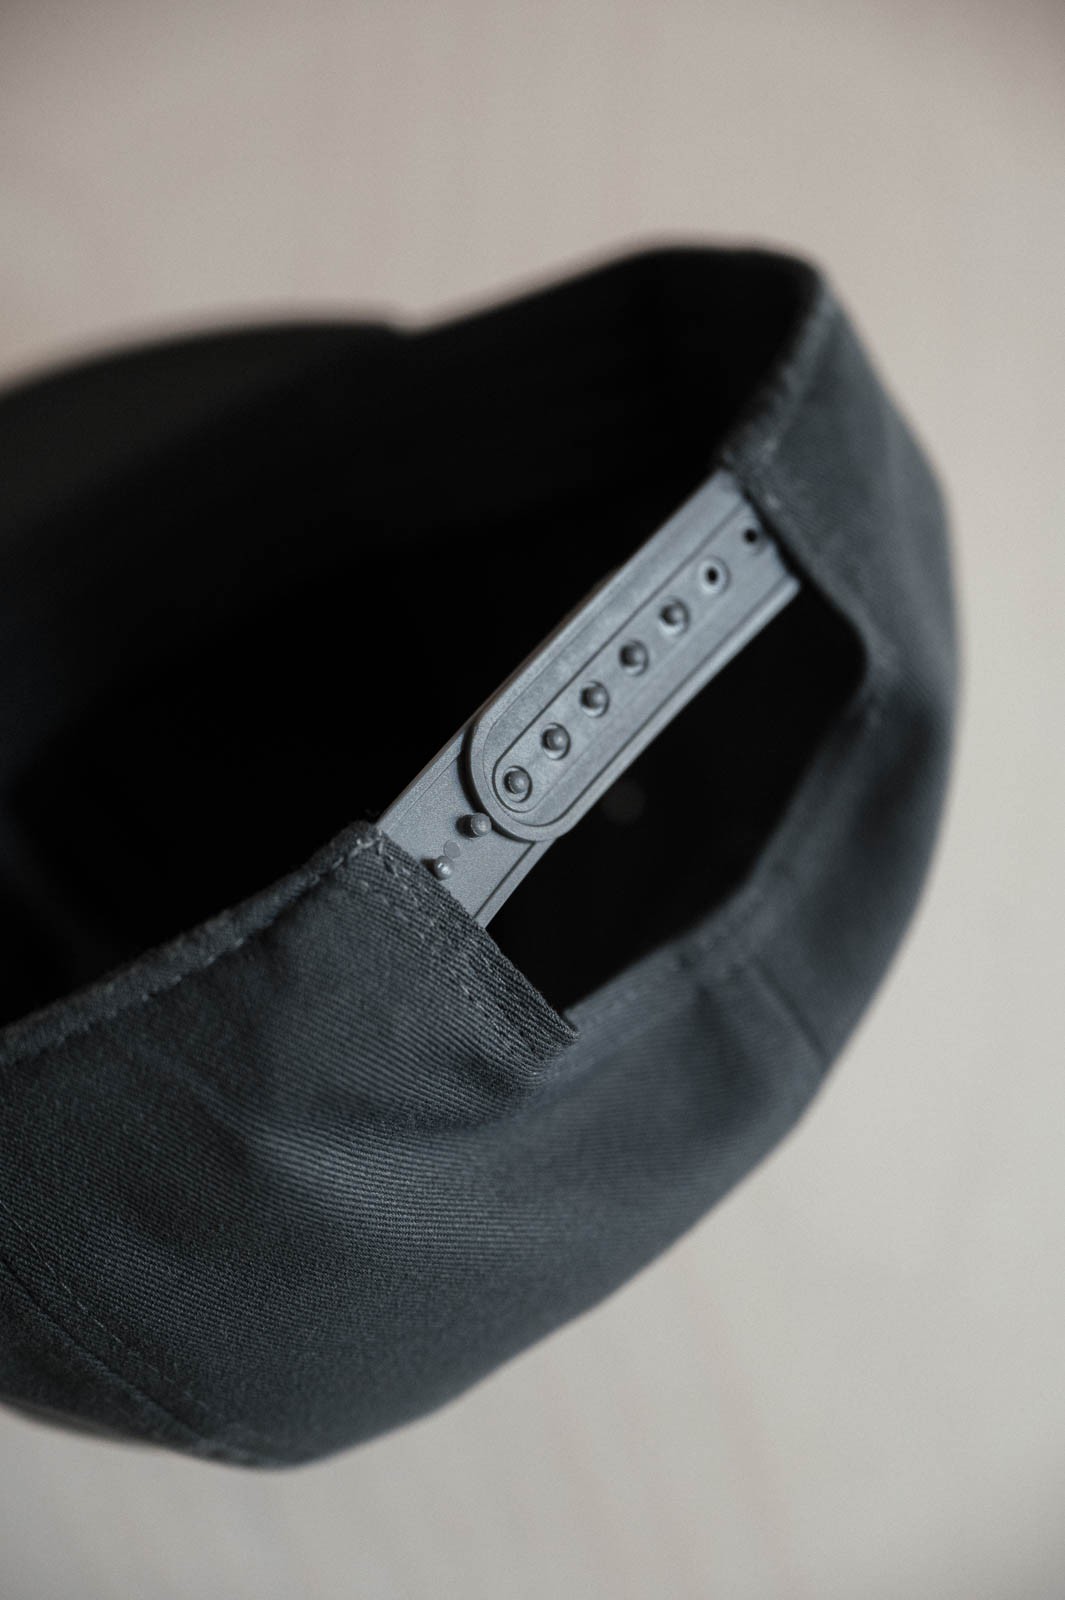 Hats Snapback grey